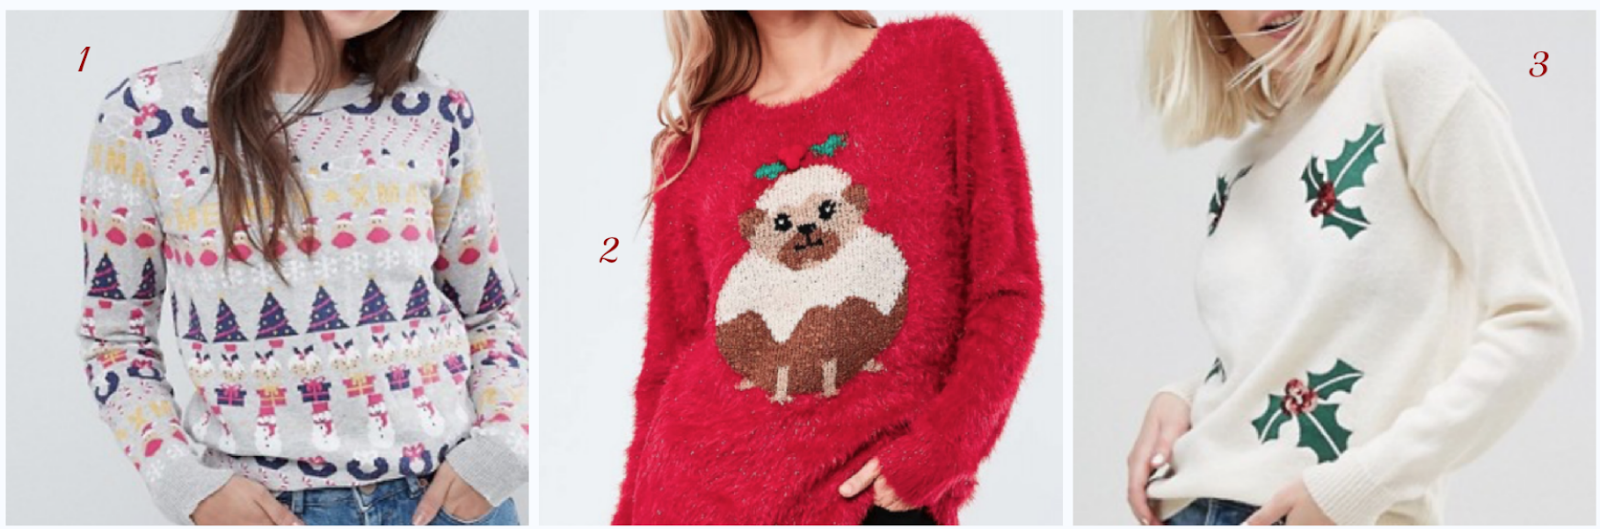 Christmas-jumper-edit-Brand-Attic-New-Look-Asos-knit-wear-festive